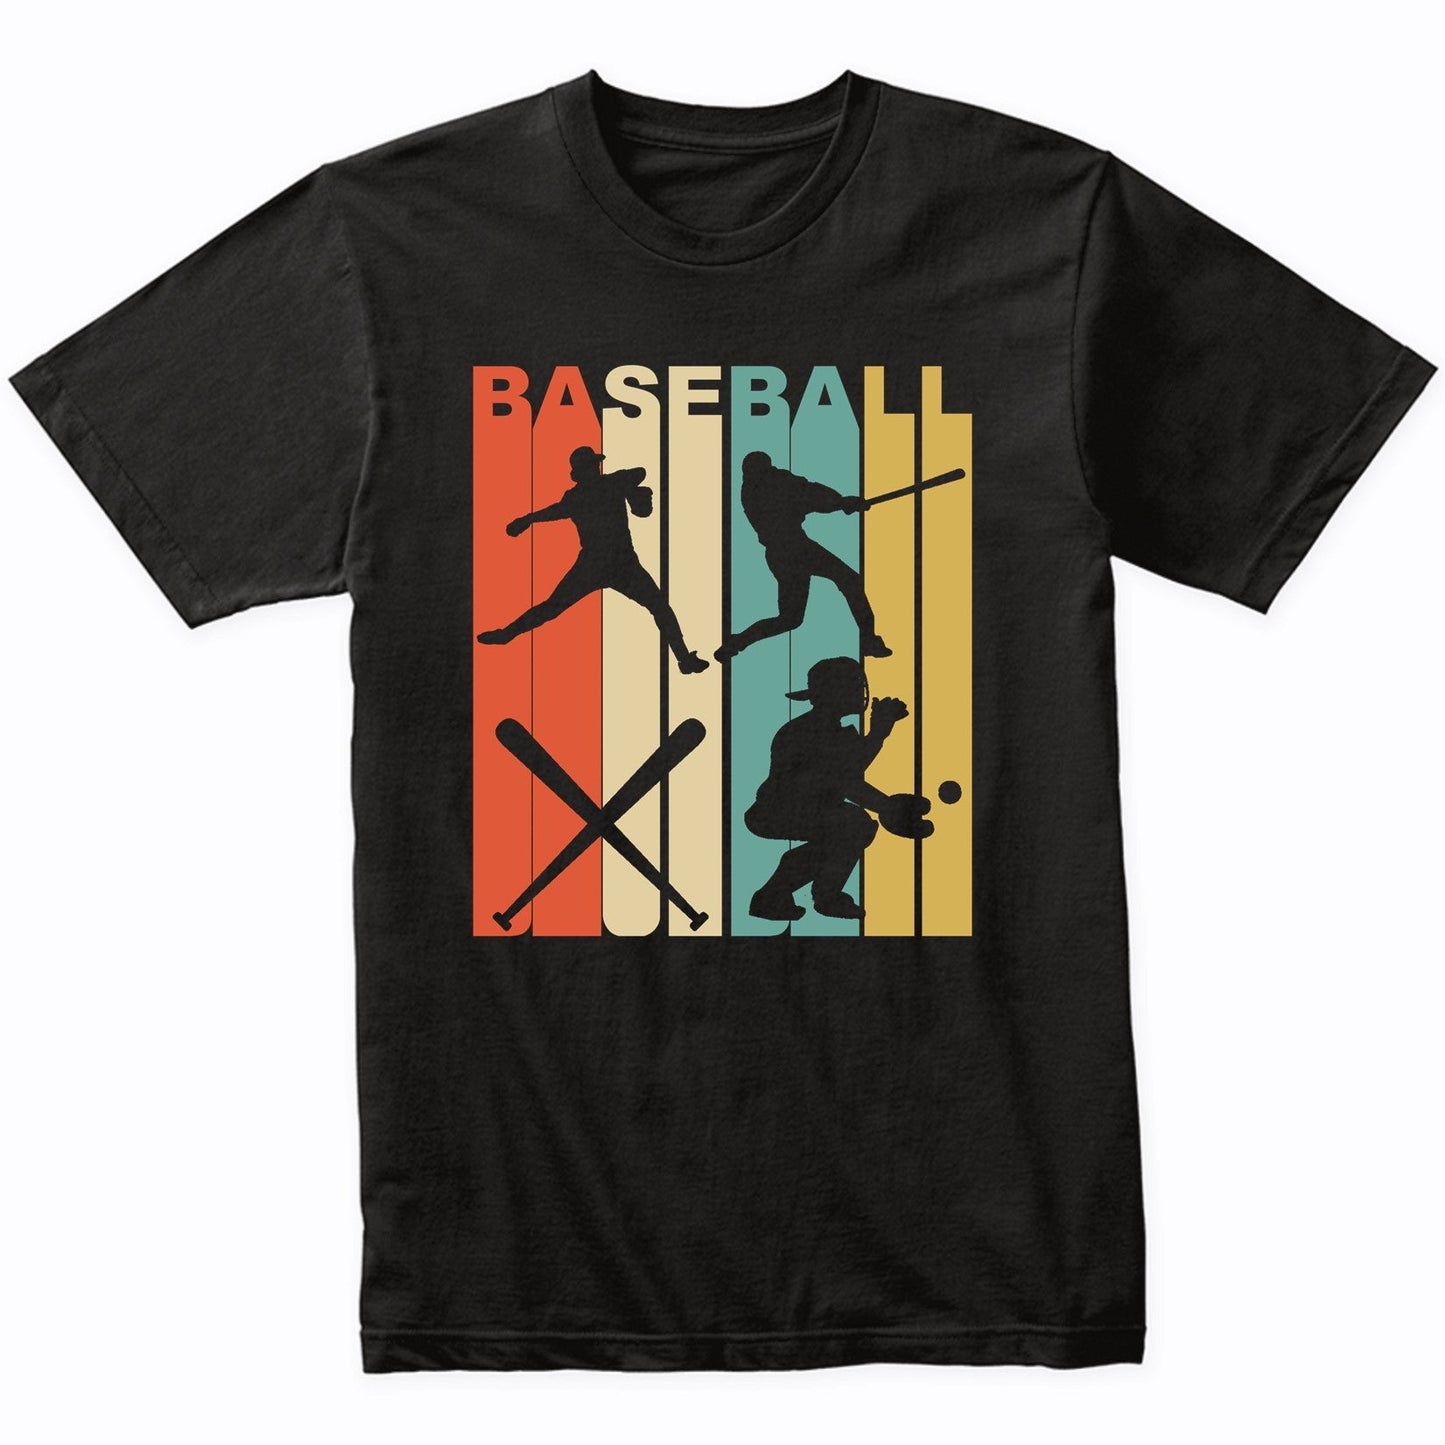 Vintage Retro 1970's Style Baseball T-Shirt